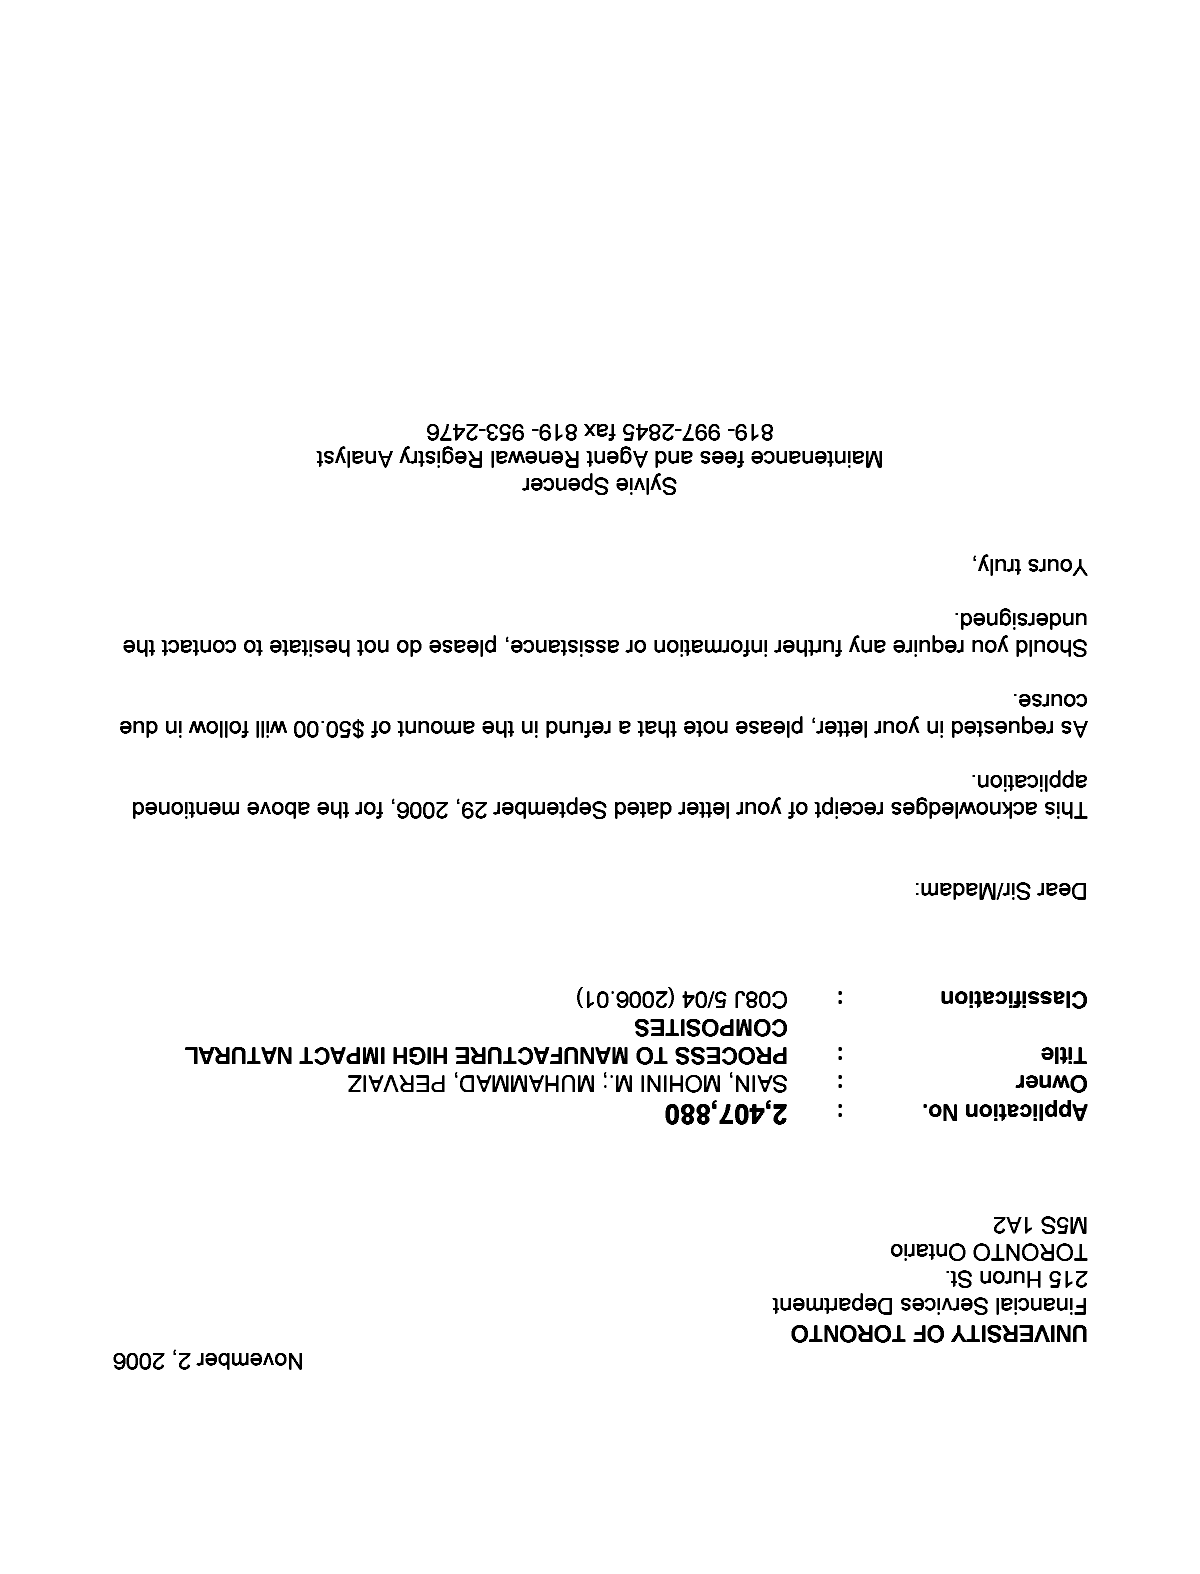 Canadian Patent Document 2407880. Correspondence 20051202. Image 1 of 1